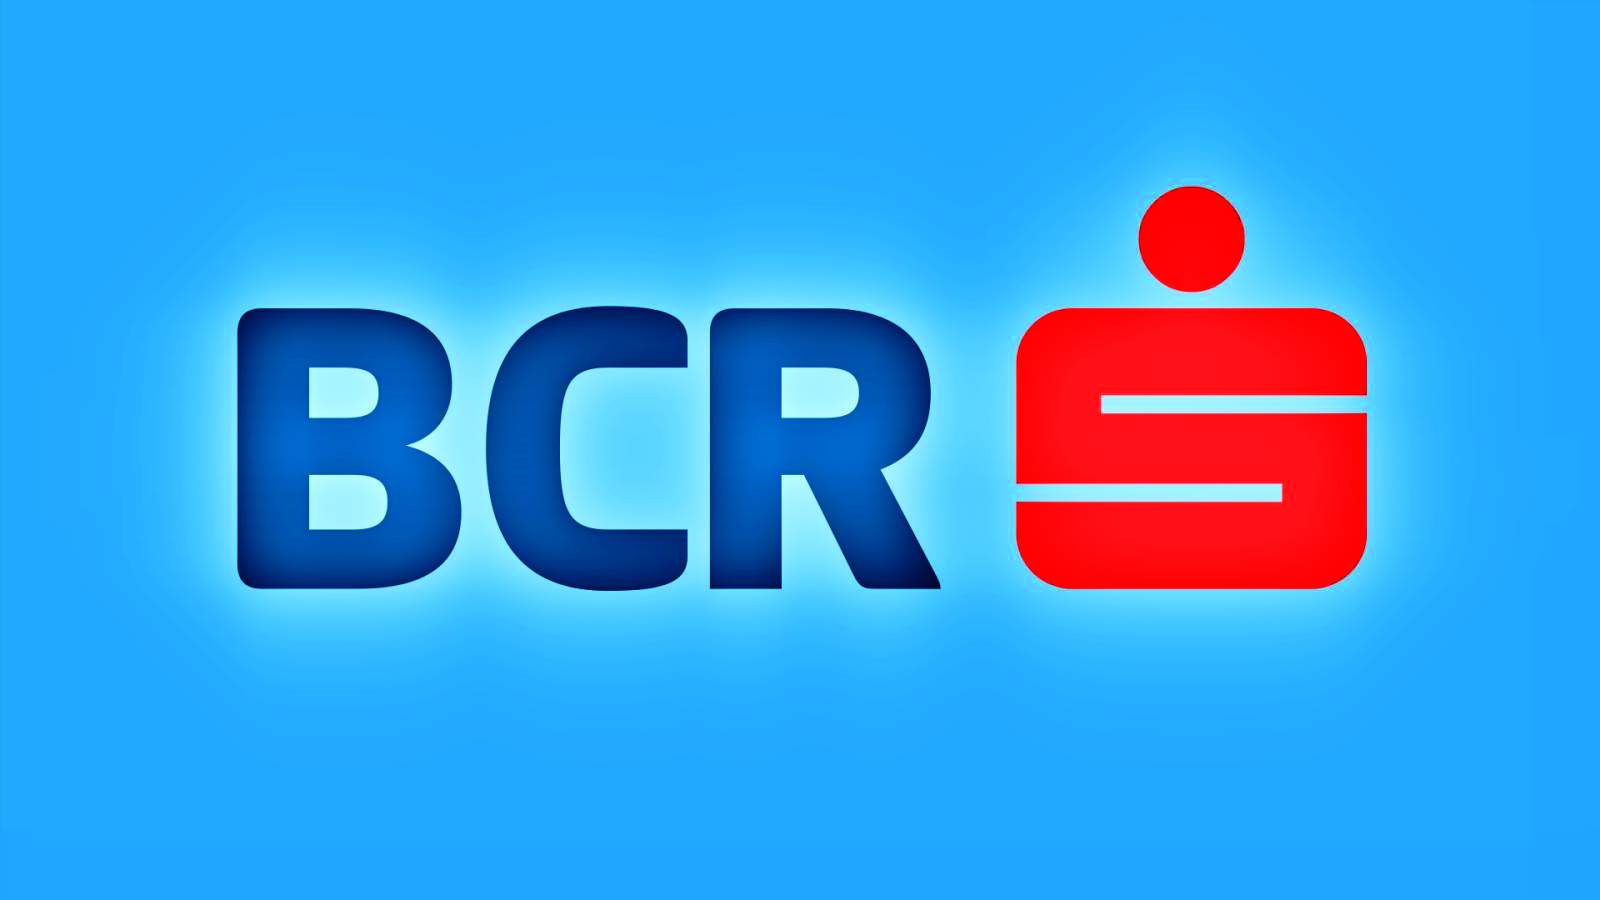 BCR Romania selection